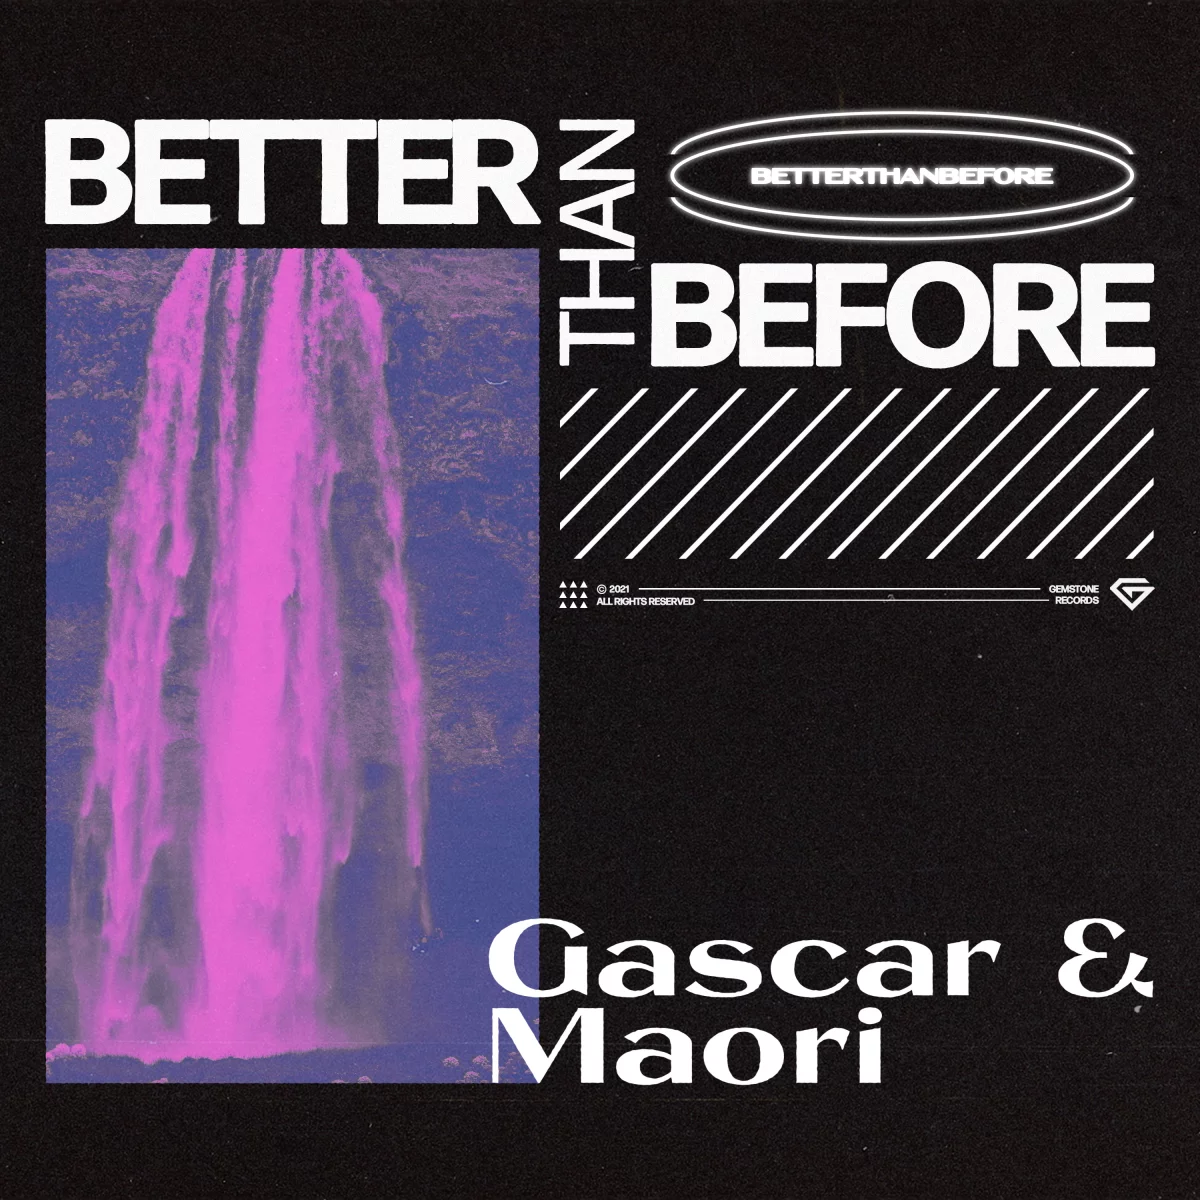 Better Than Before - Gascar⁠ & Maori⁠